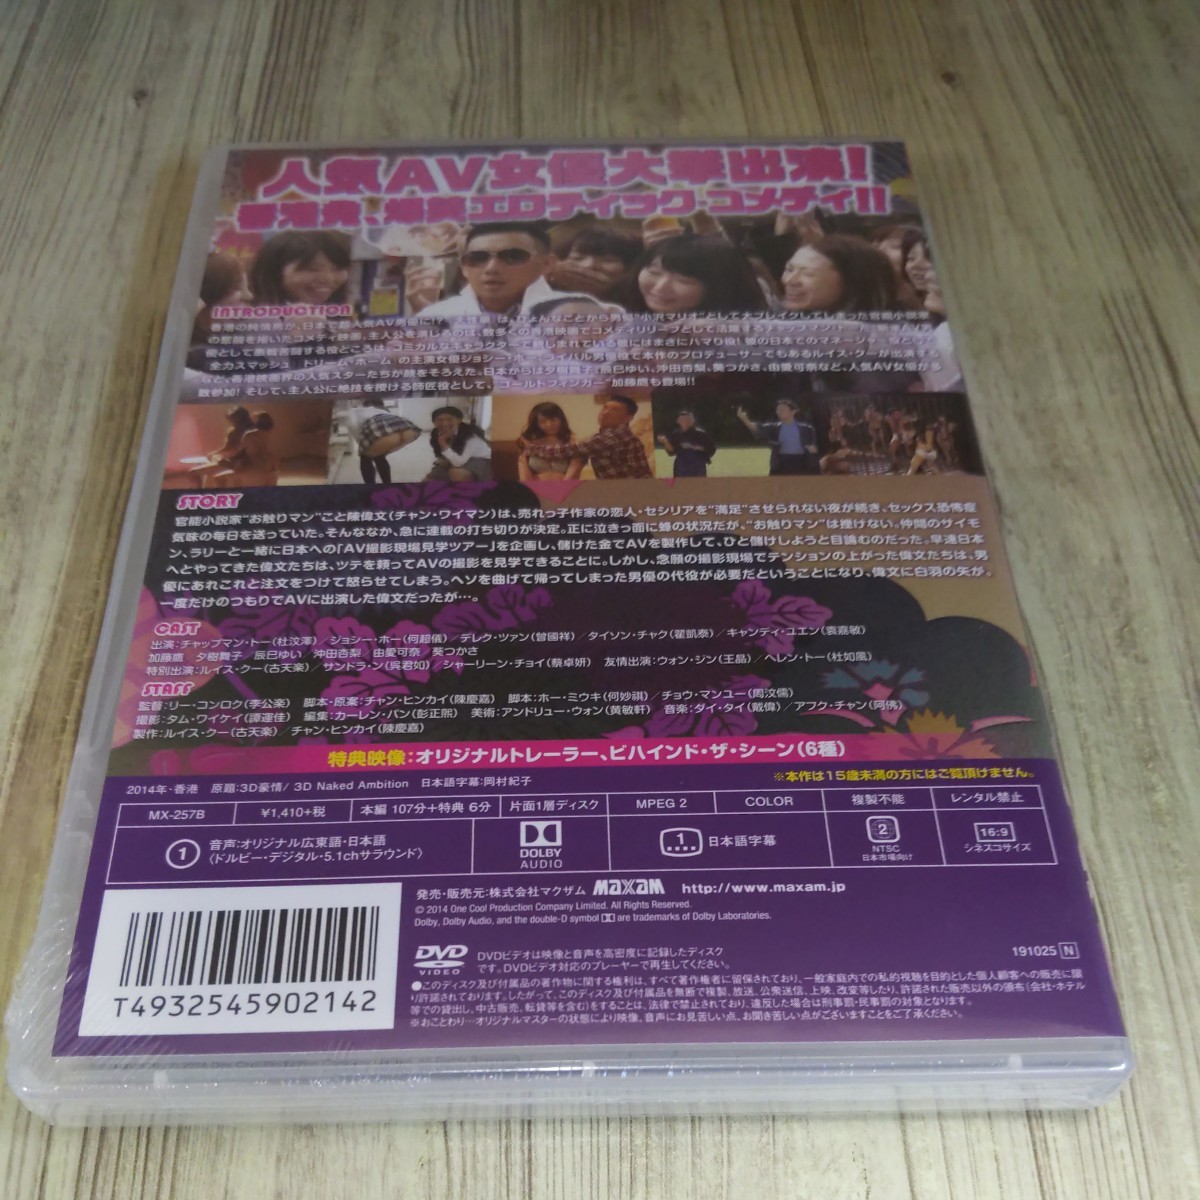 mg70 large ..(\'14 Hong Kong ) tea p man *to-josi-* horn . love possible ... umbrella .... Kato .DVD new goods unopened abroad movie 